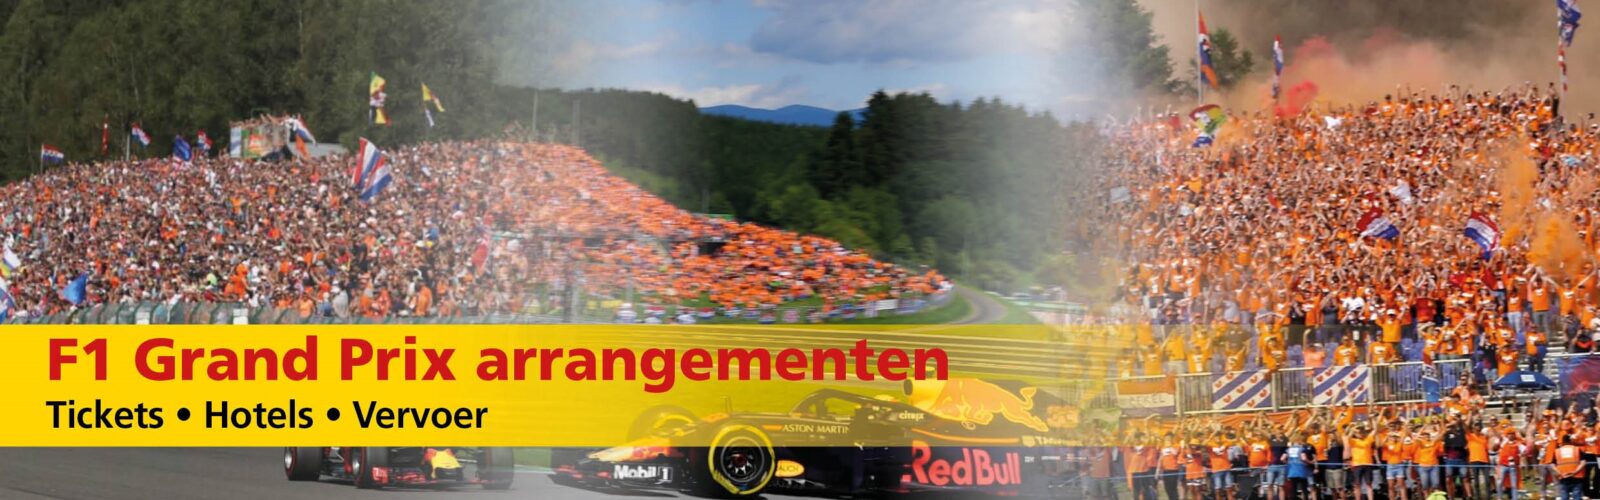 Banner F1 arrangementen